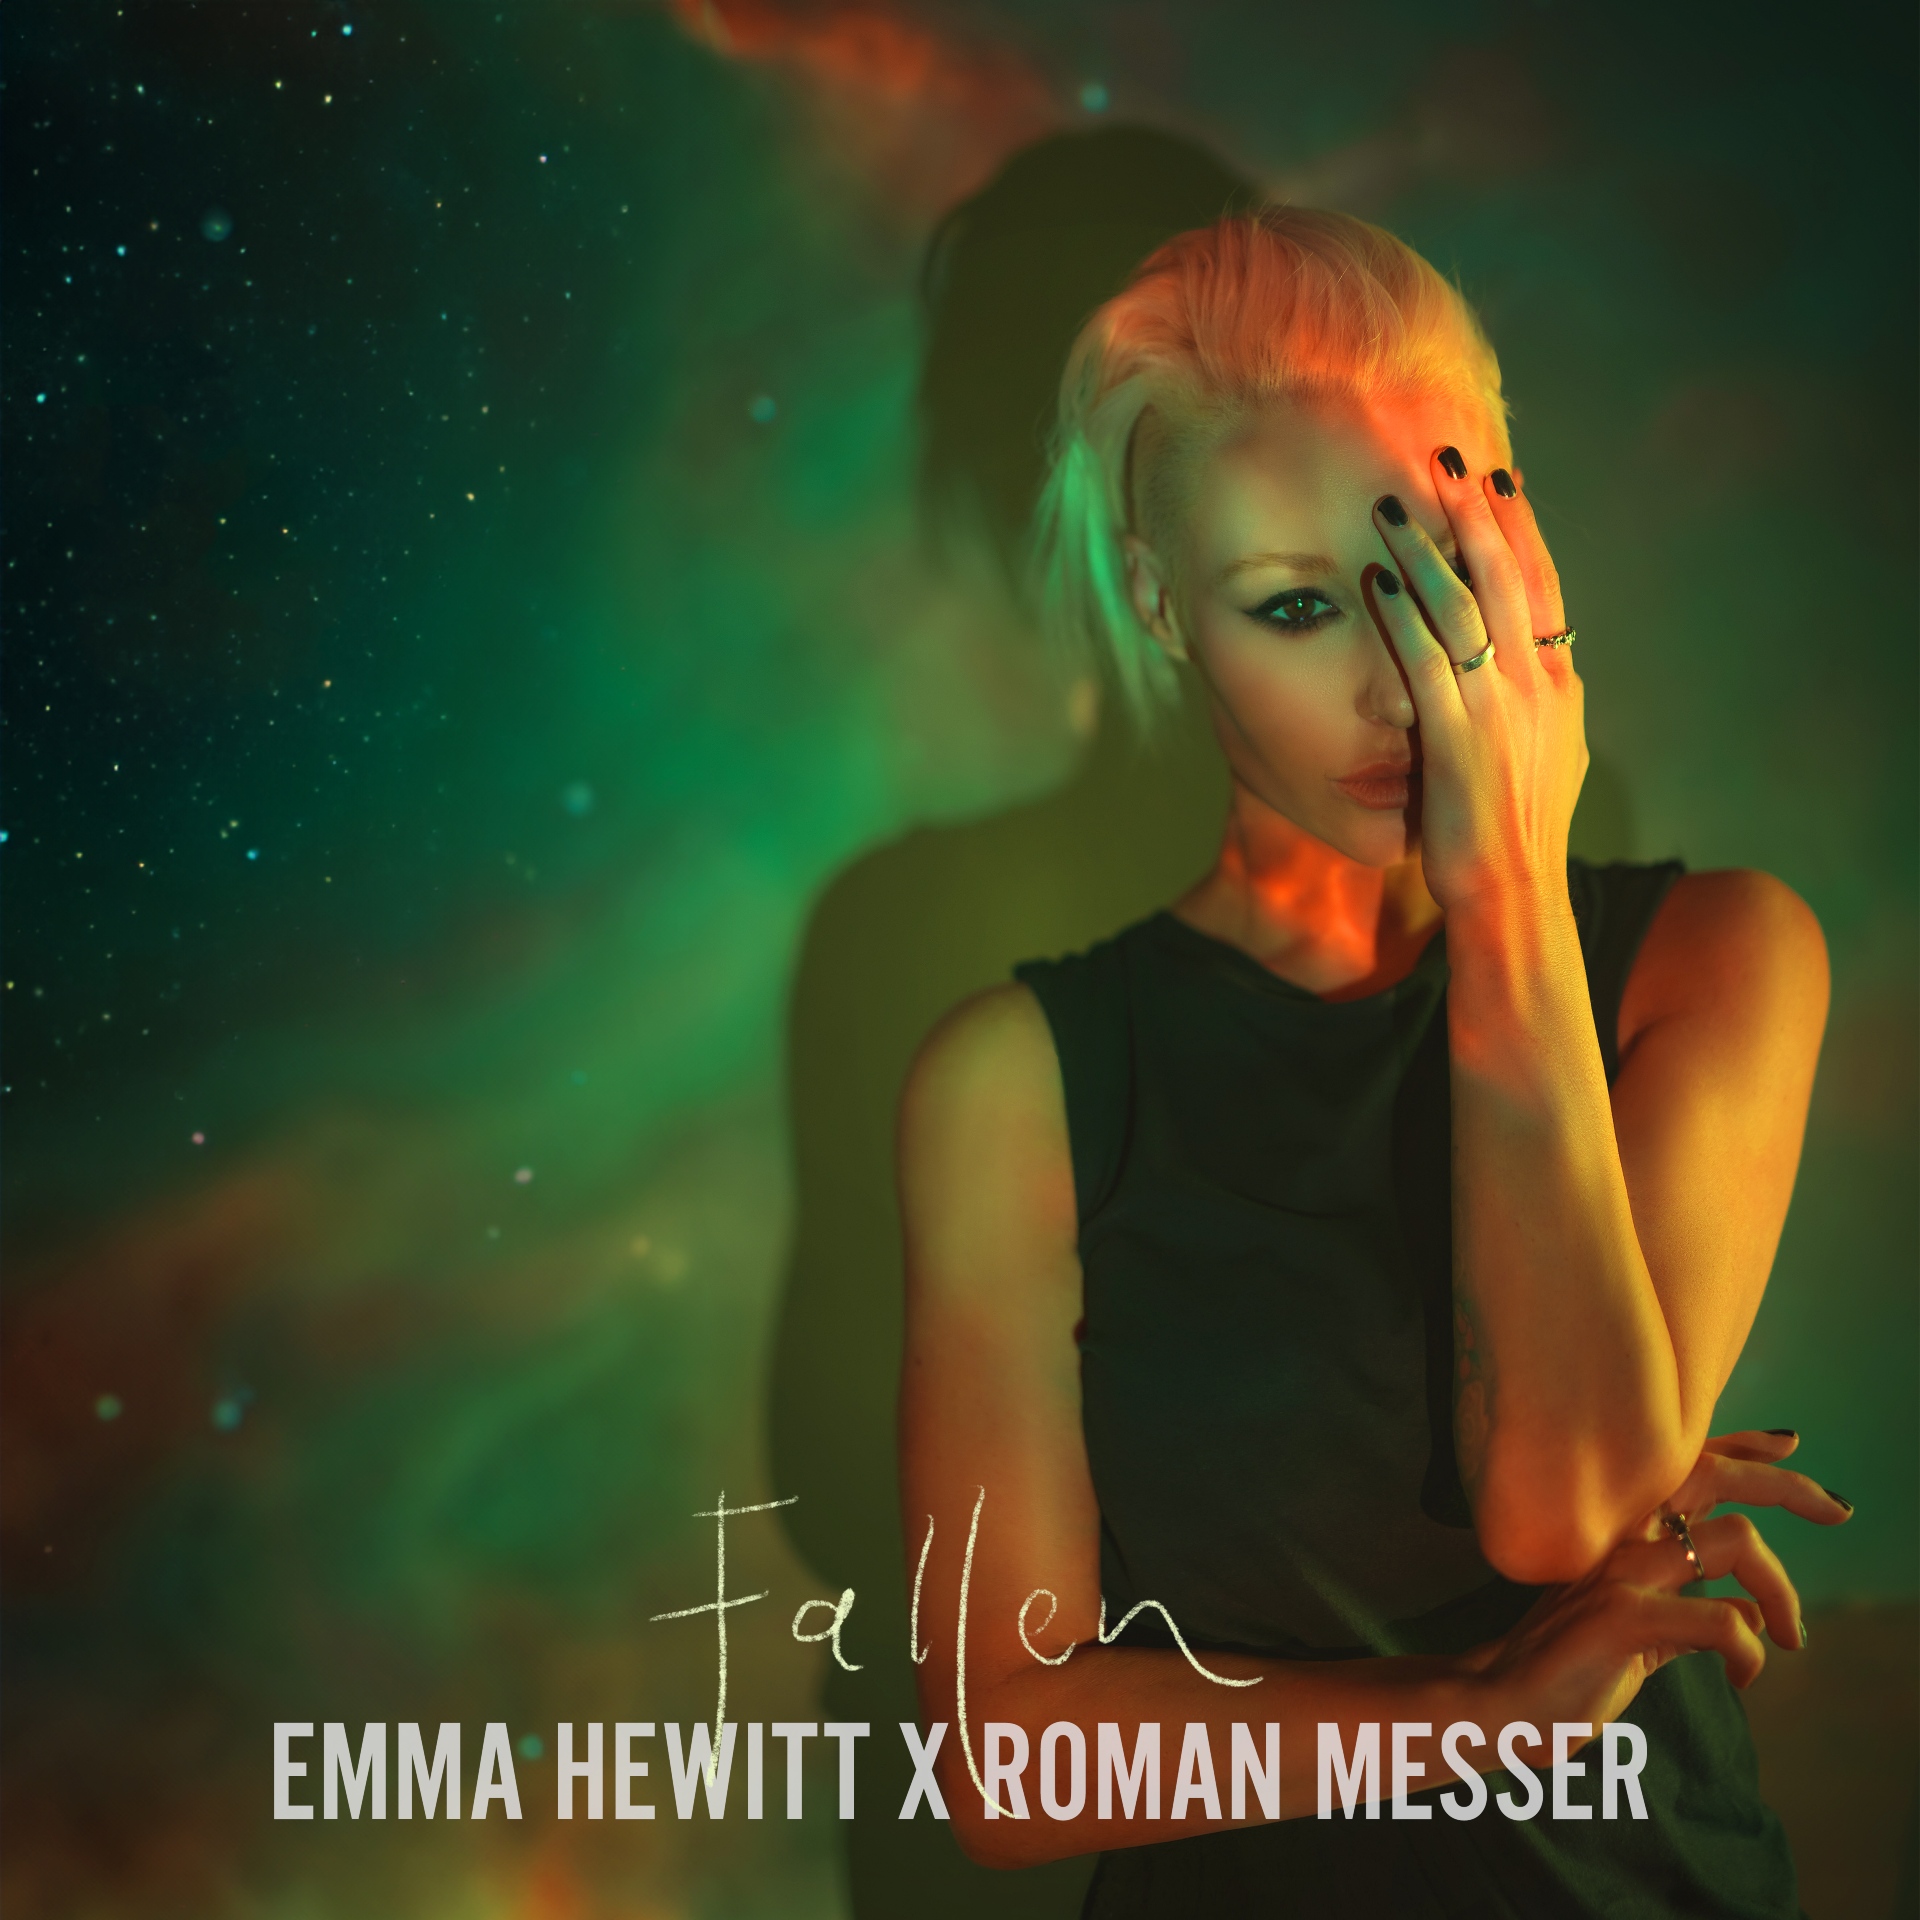 Emma Hewitt x Roman Messer presents Fallen on Black Hole Recordings